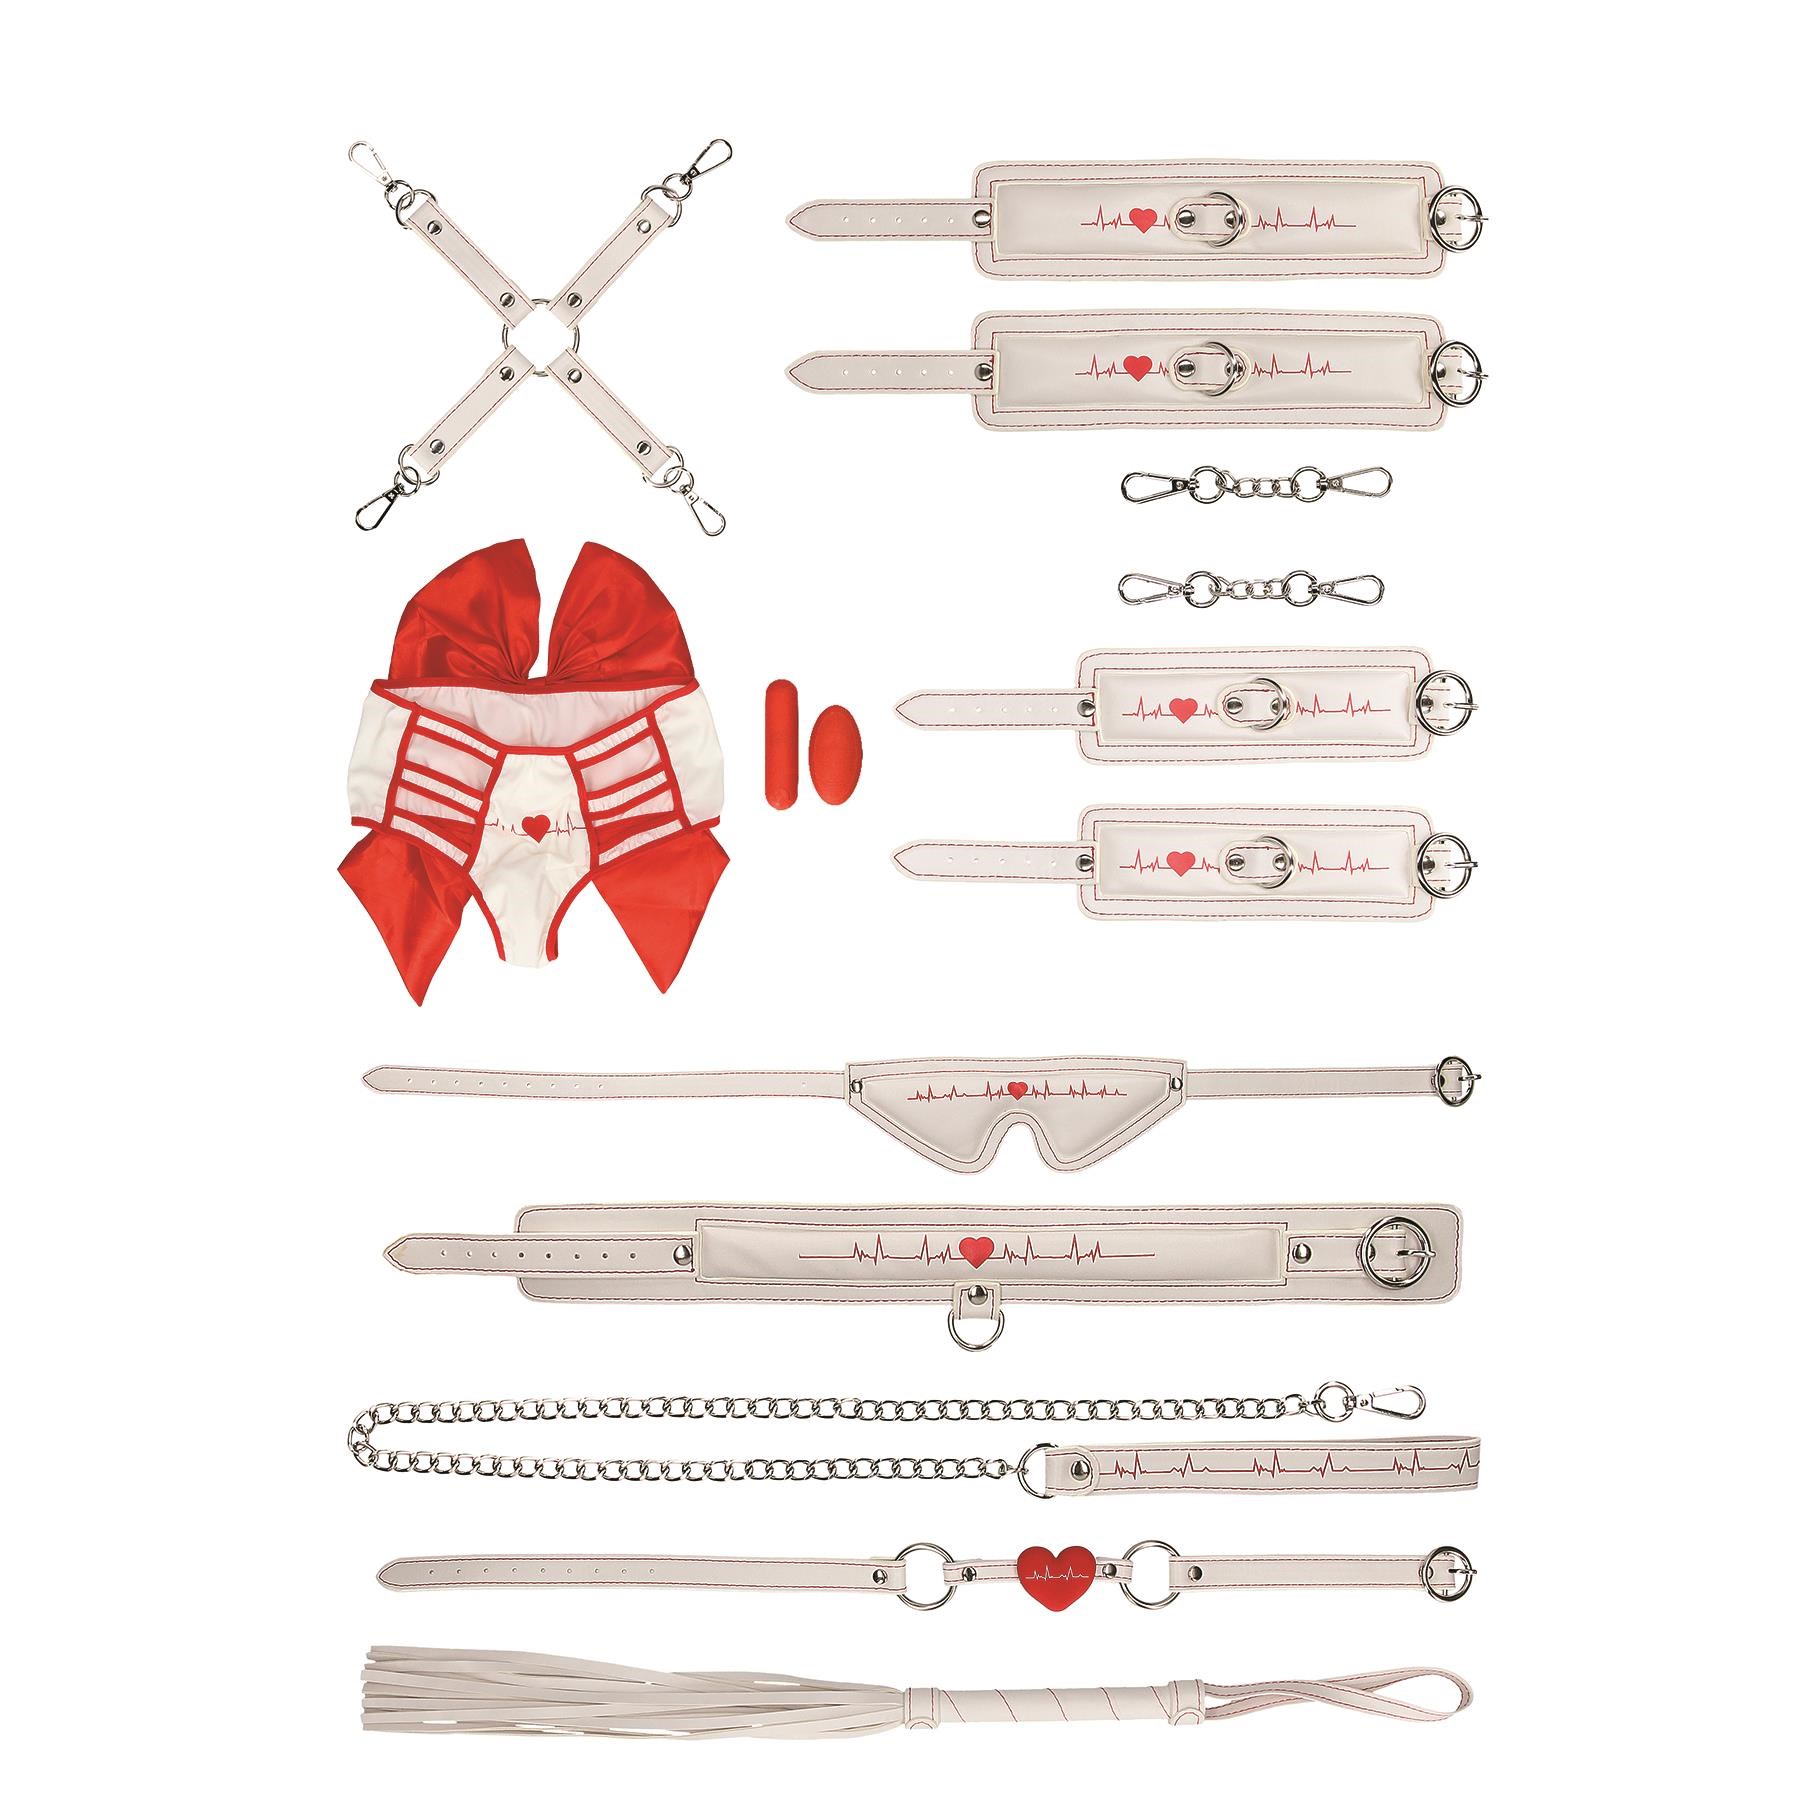 Nurse Bondage Kit - All components